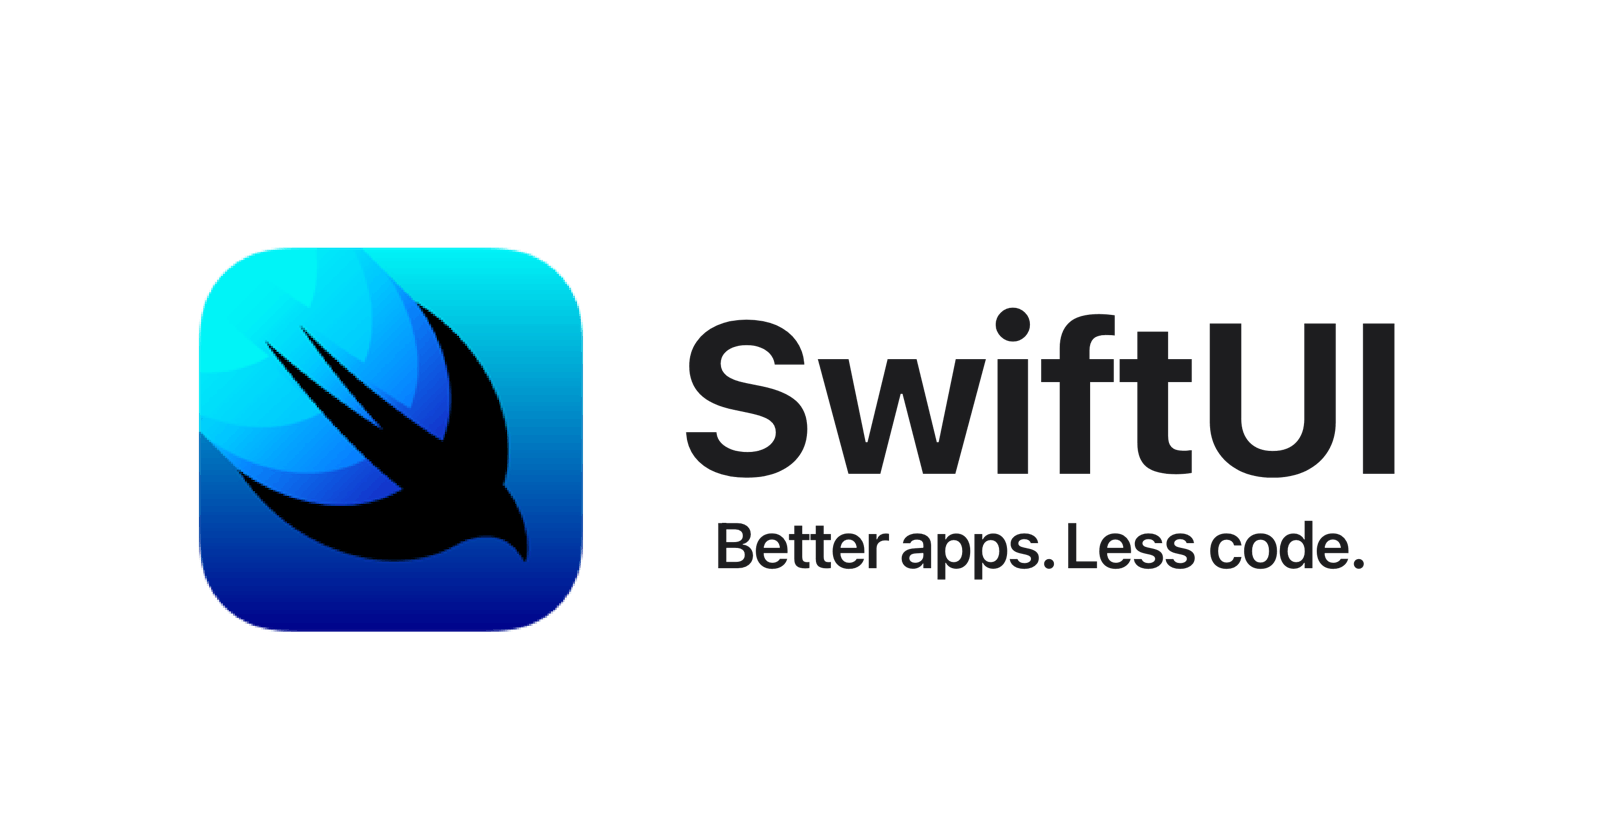 How easy is Swift UI?